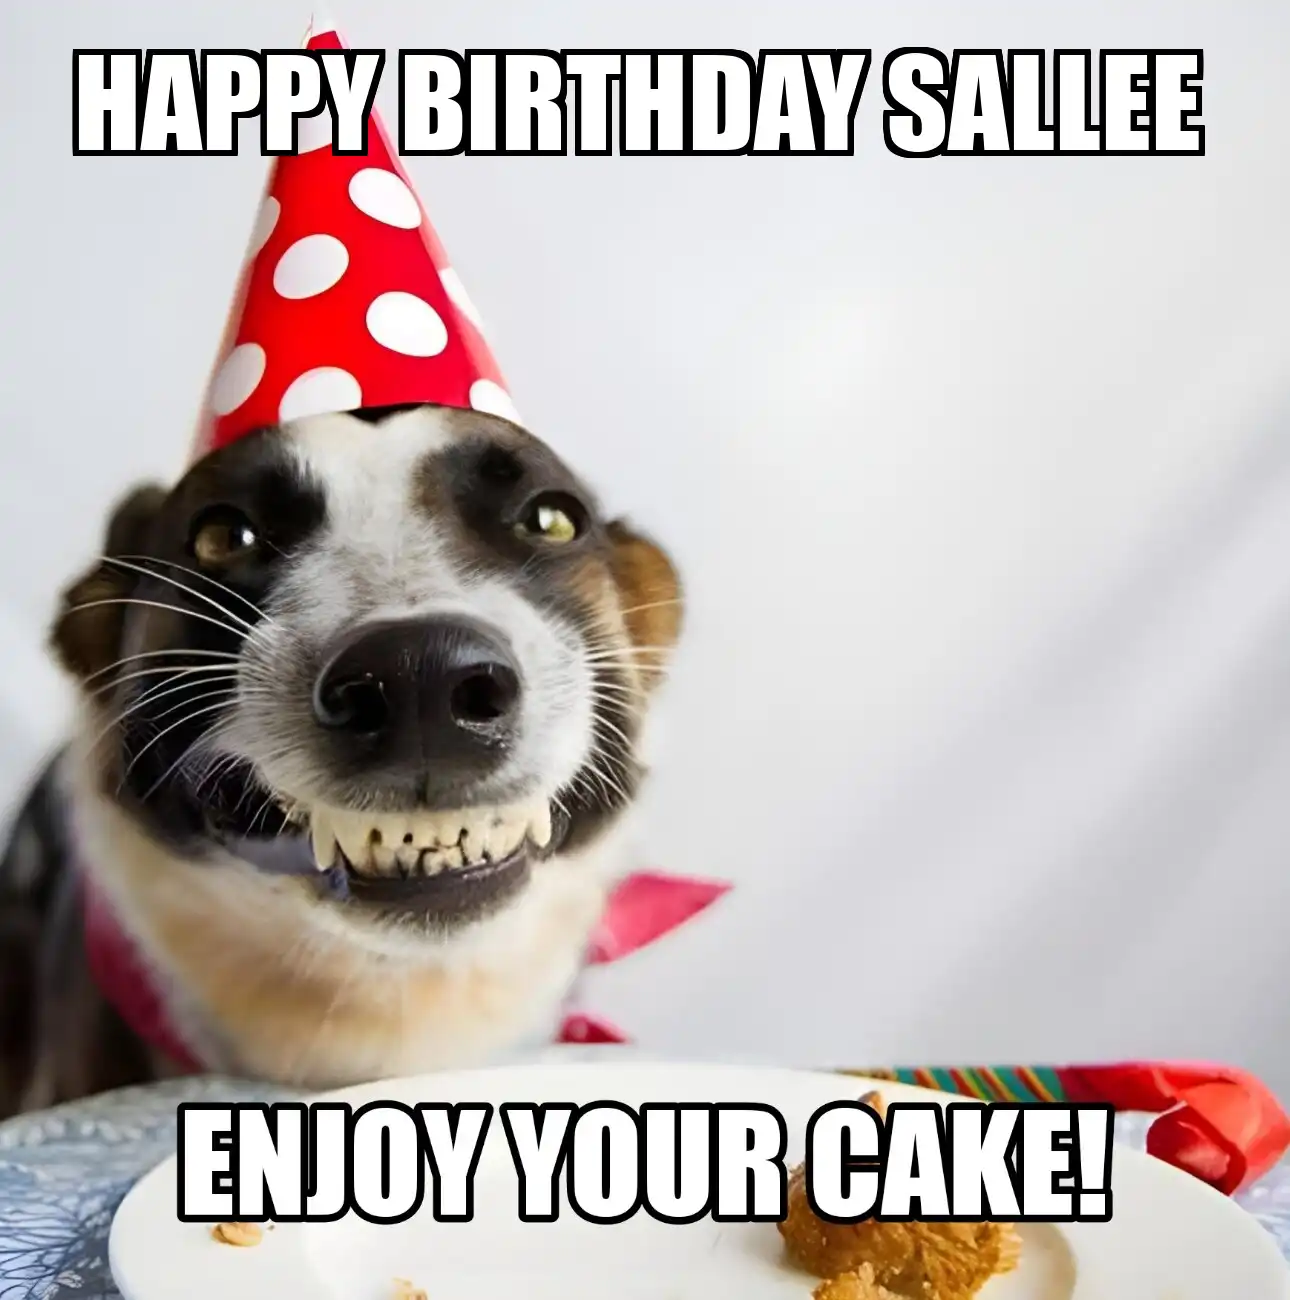 Happy Birthday Sallee Enjoy Your Cake Dog Meme